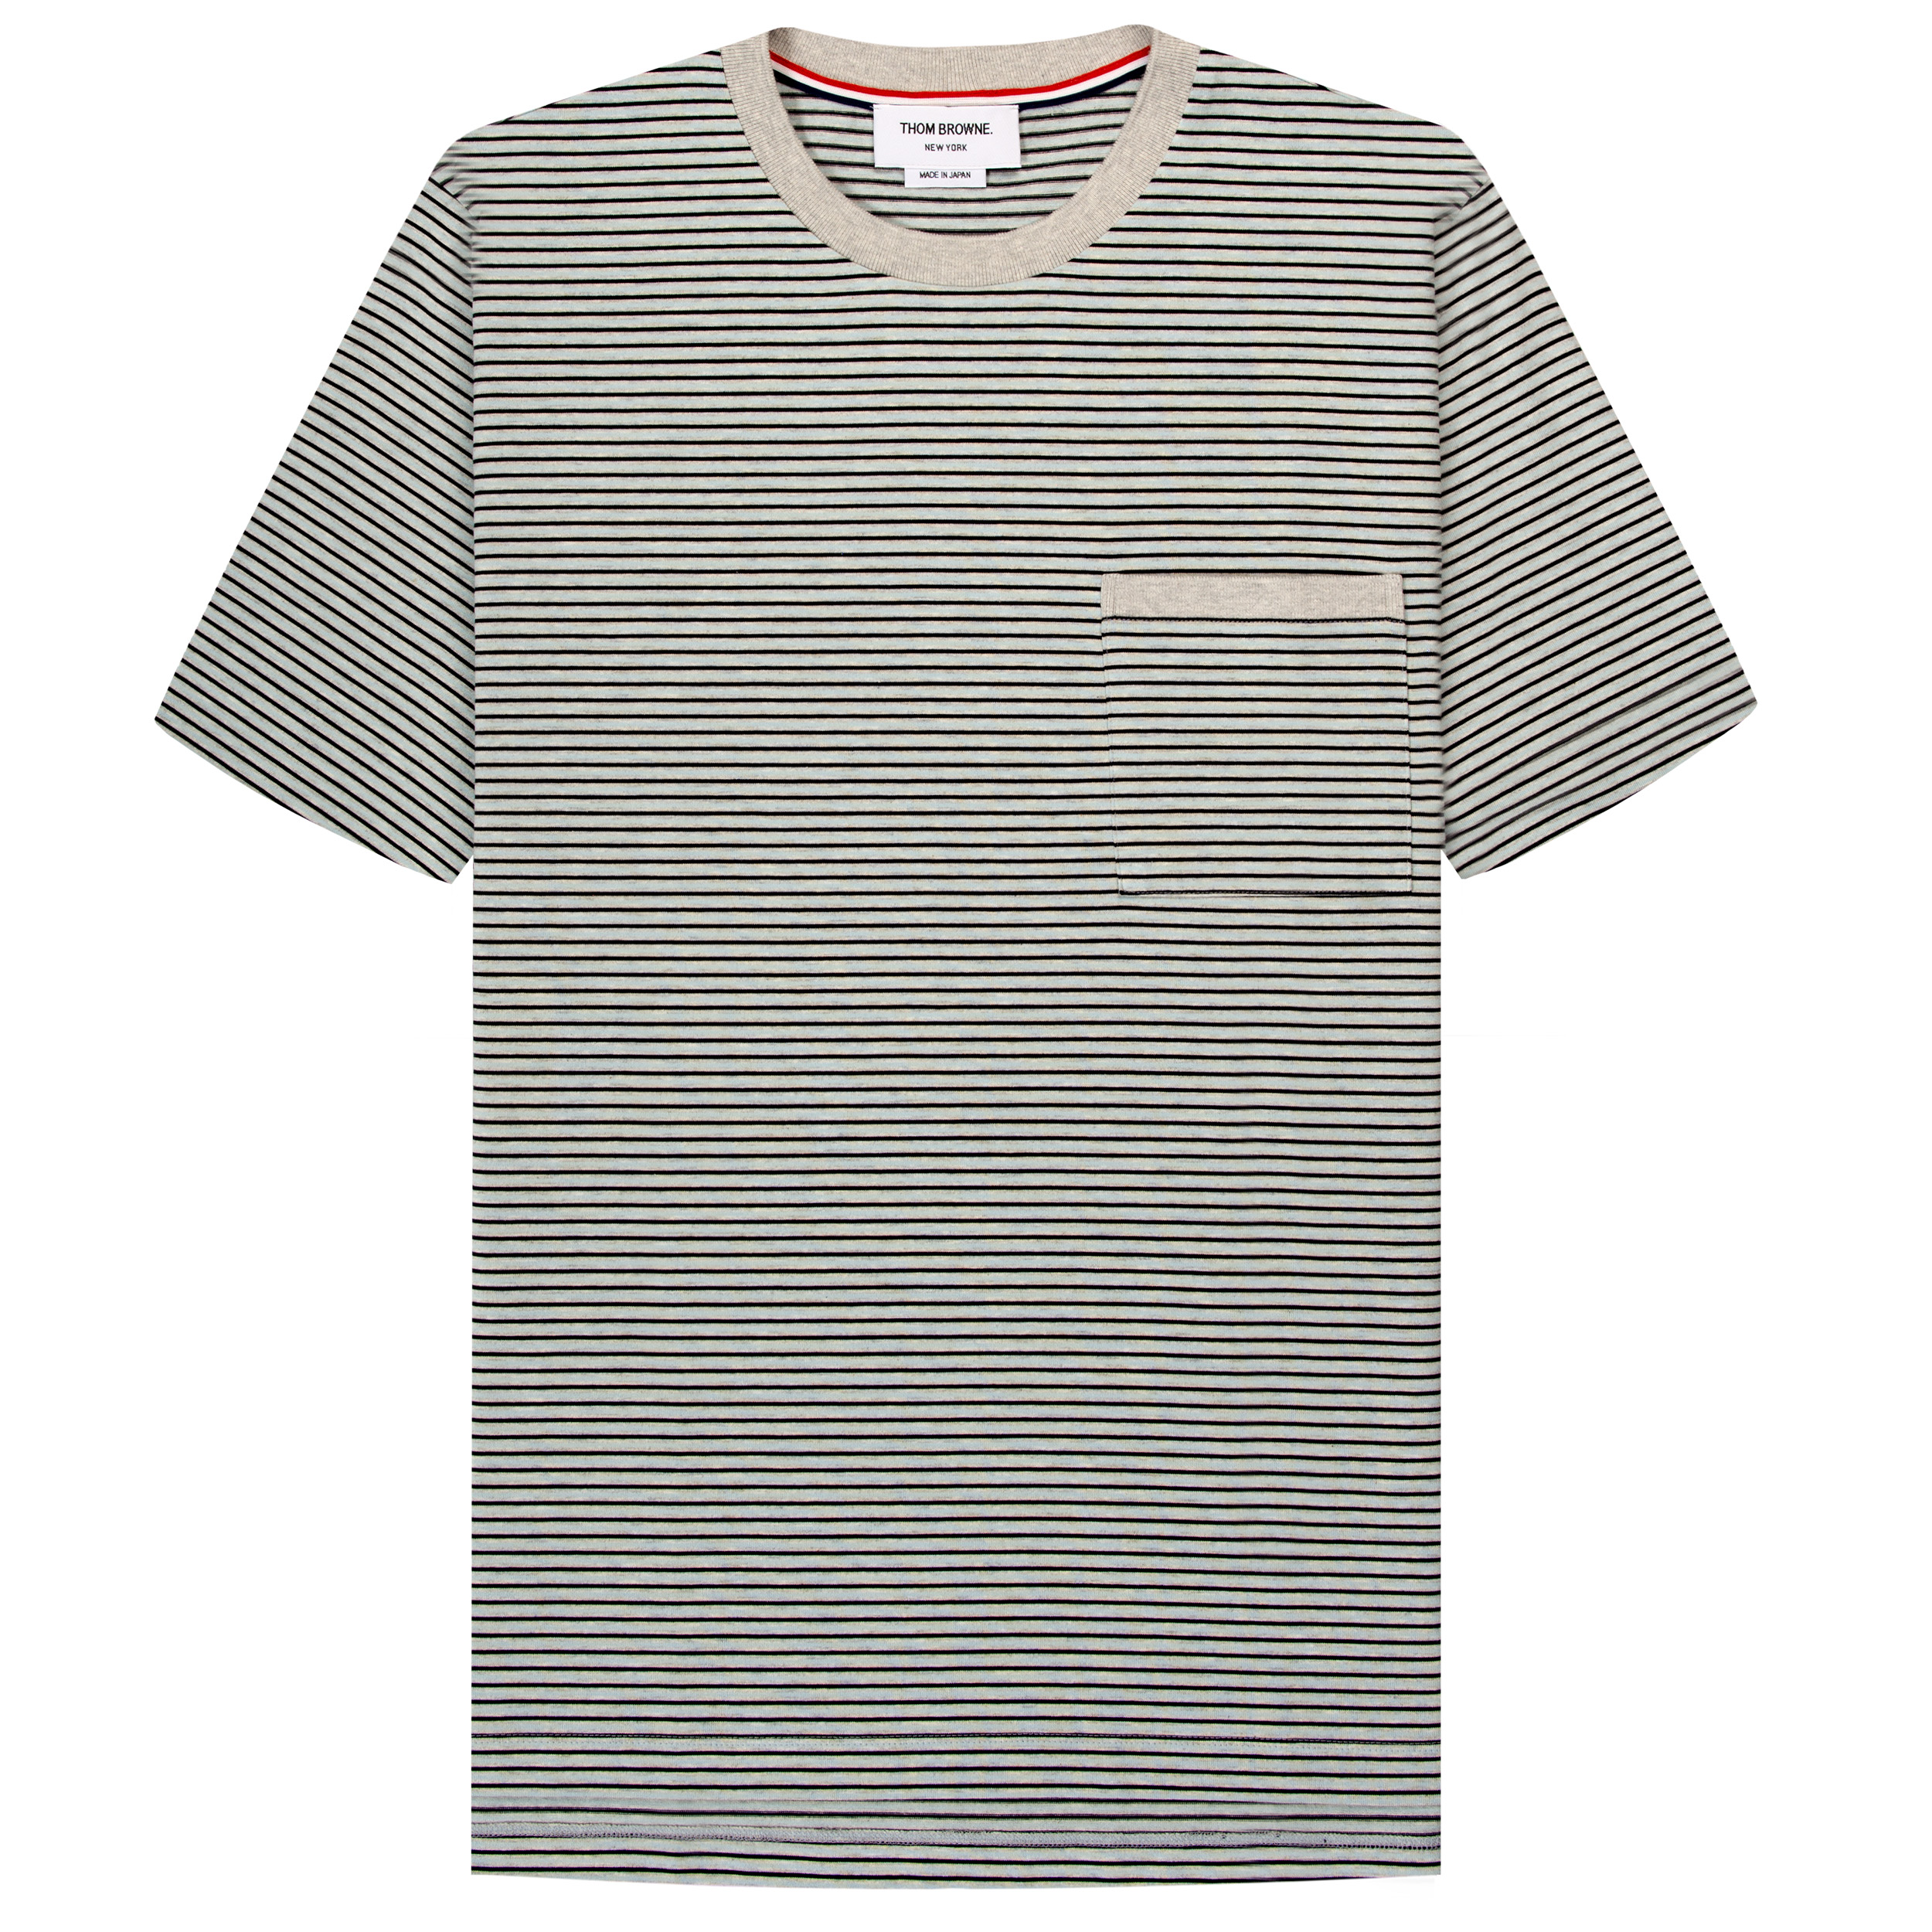 Thom Browne Thin Striped T-shirt Grey/Navy